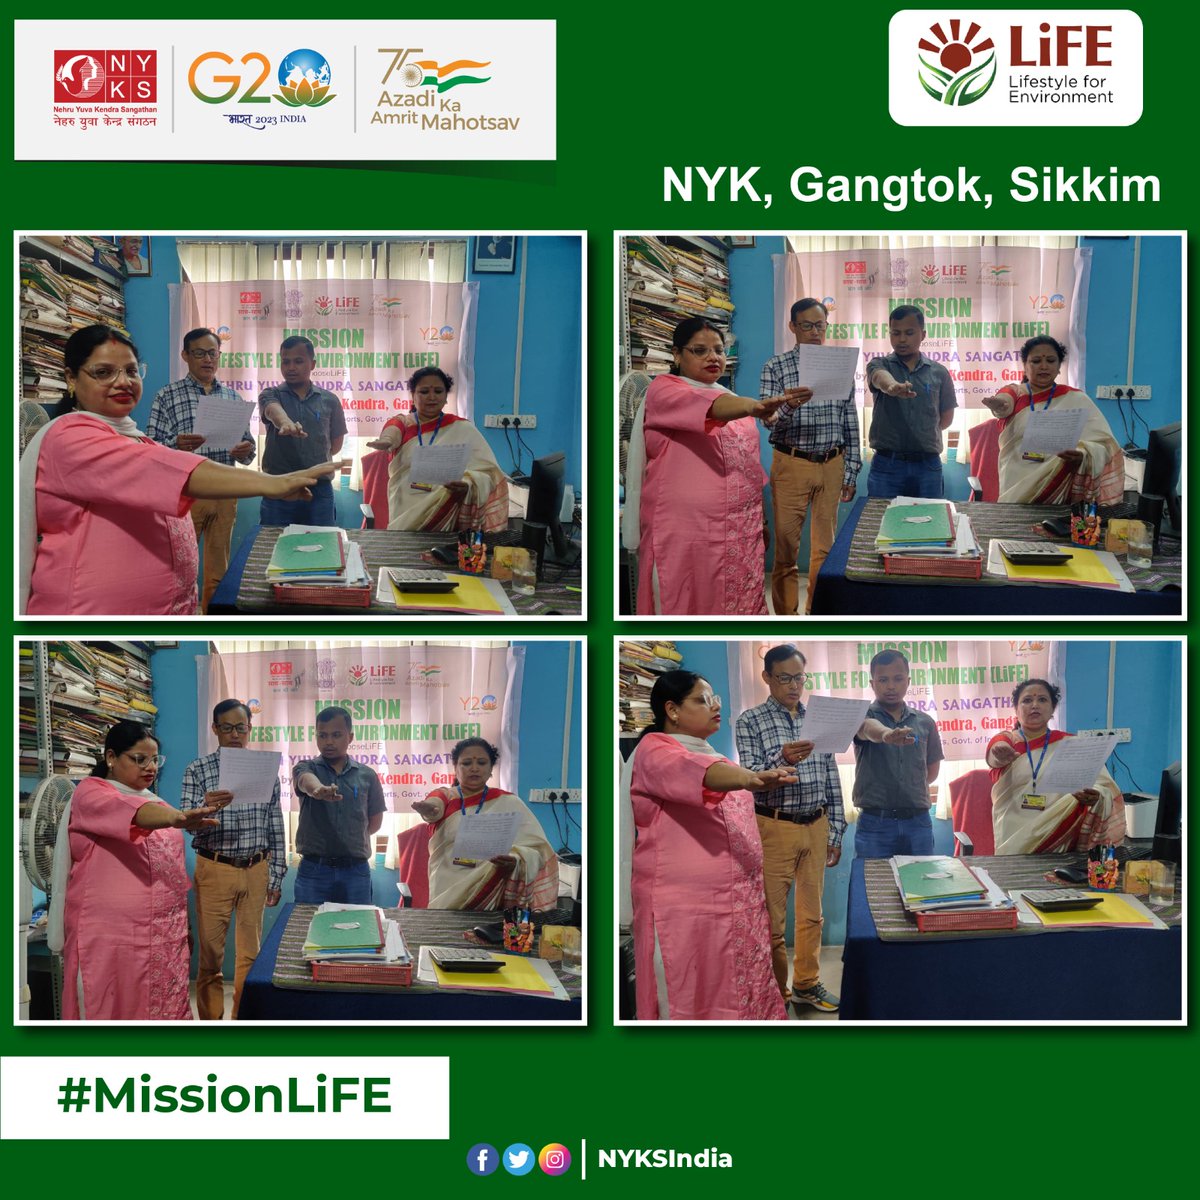 Nehru Yuva Kendra Gangtok (@NykGangtok), Sikkim conducted Mission LiFE awareness activity along with Pledge-taking.

#MissionLiFE #ChooseLiFE